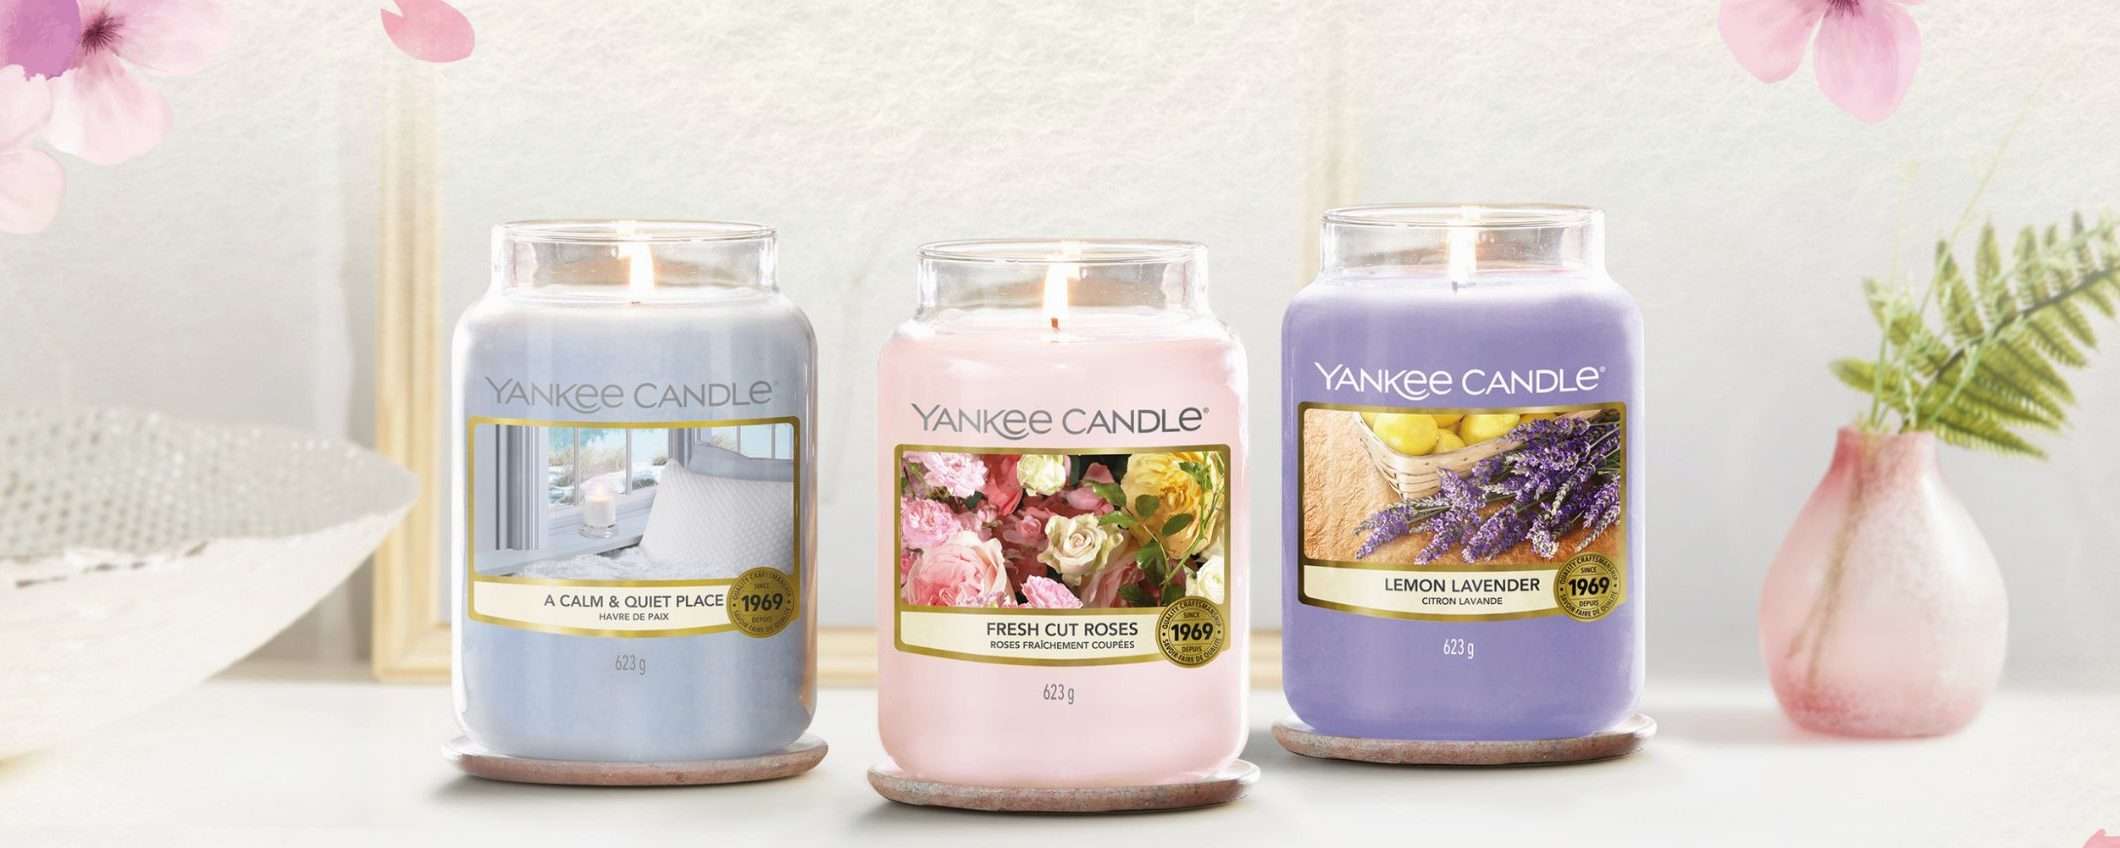 Yankee Candle: SVENDITA di candele profumate su Amazon, che SCONTI